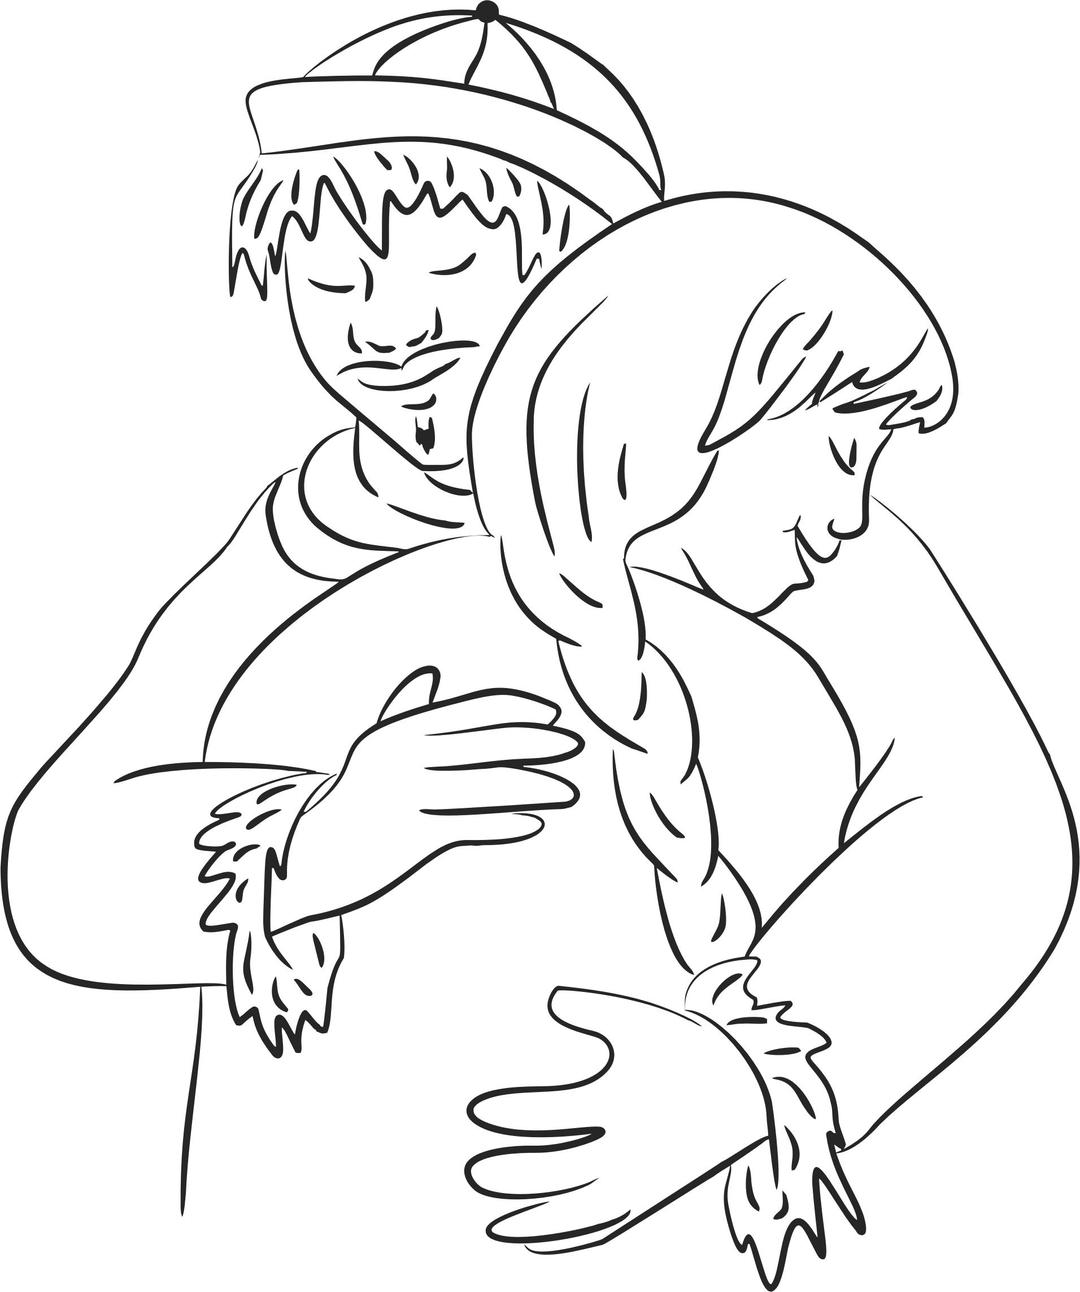 Man And Woman Hugging Line Art png transparent